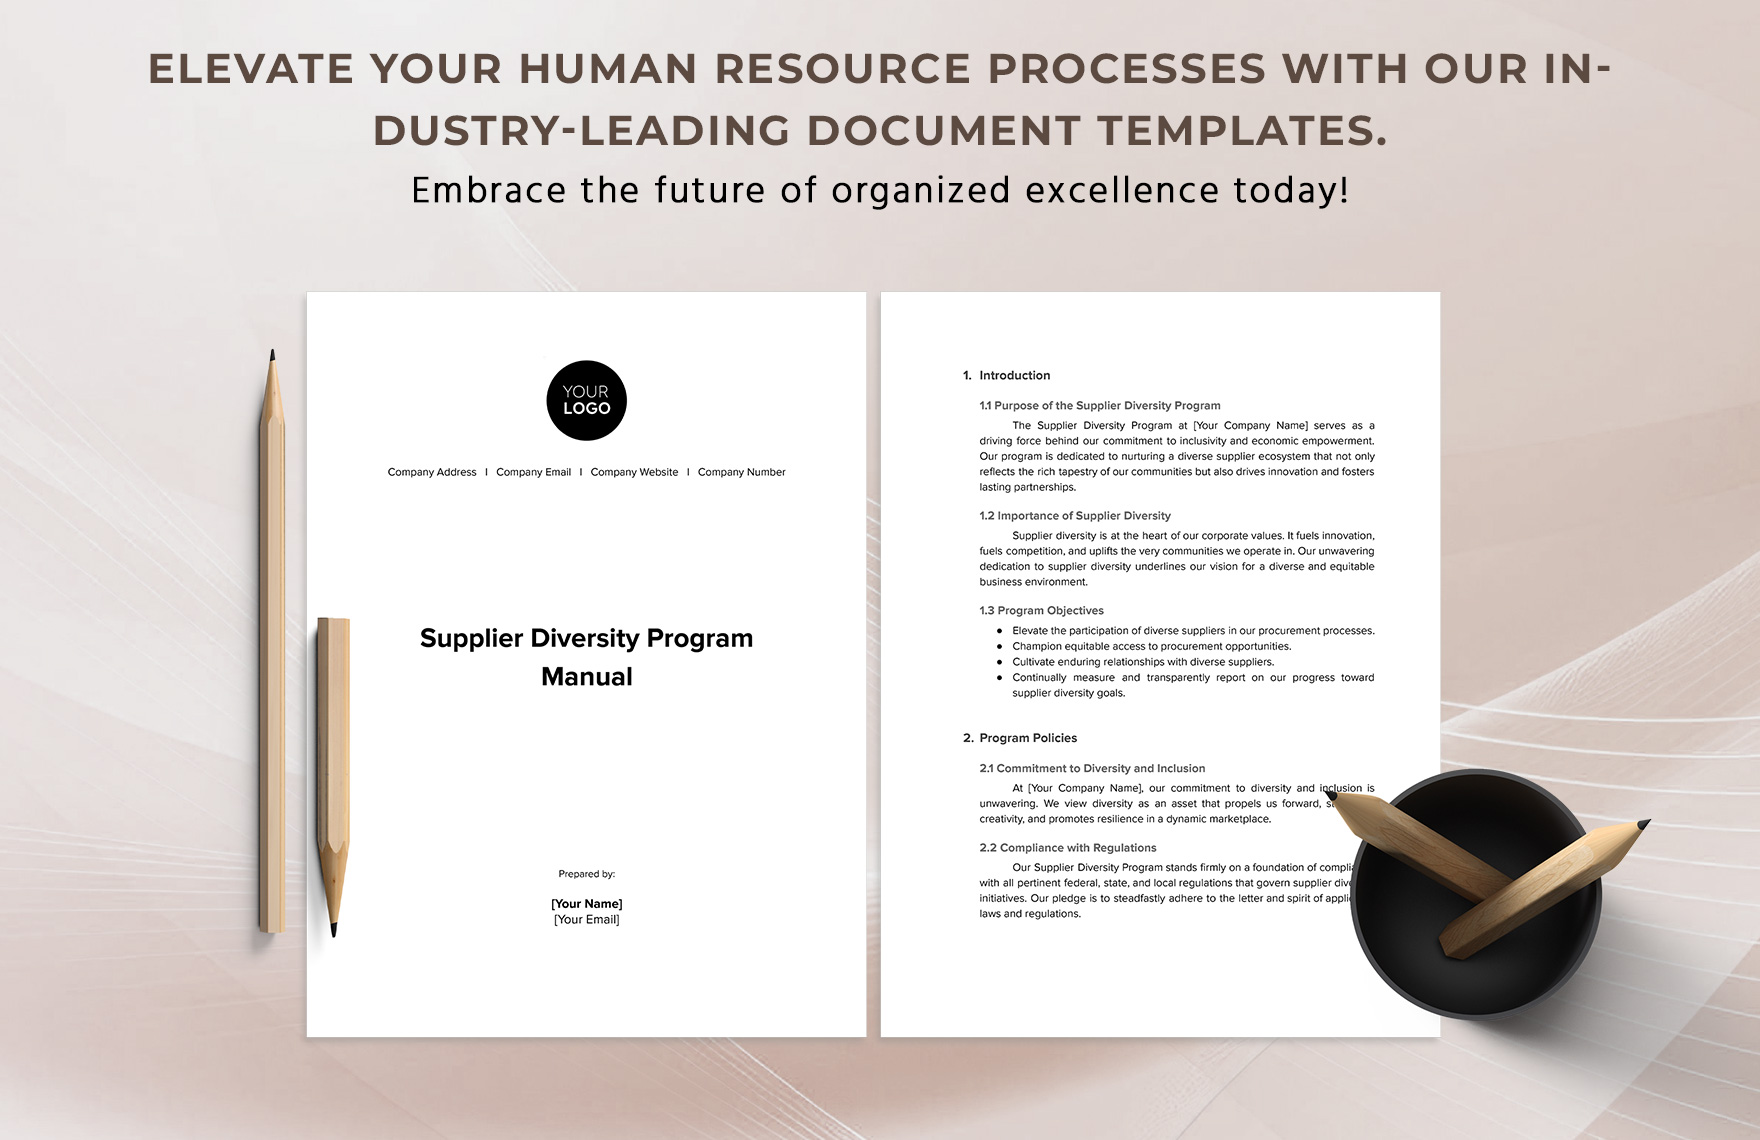 Supplier Diversity Program Manual HR Template